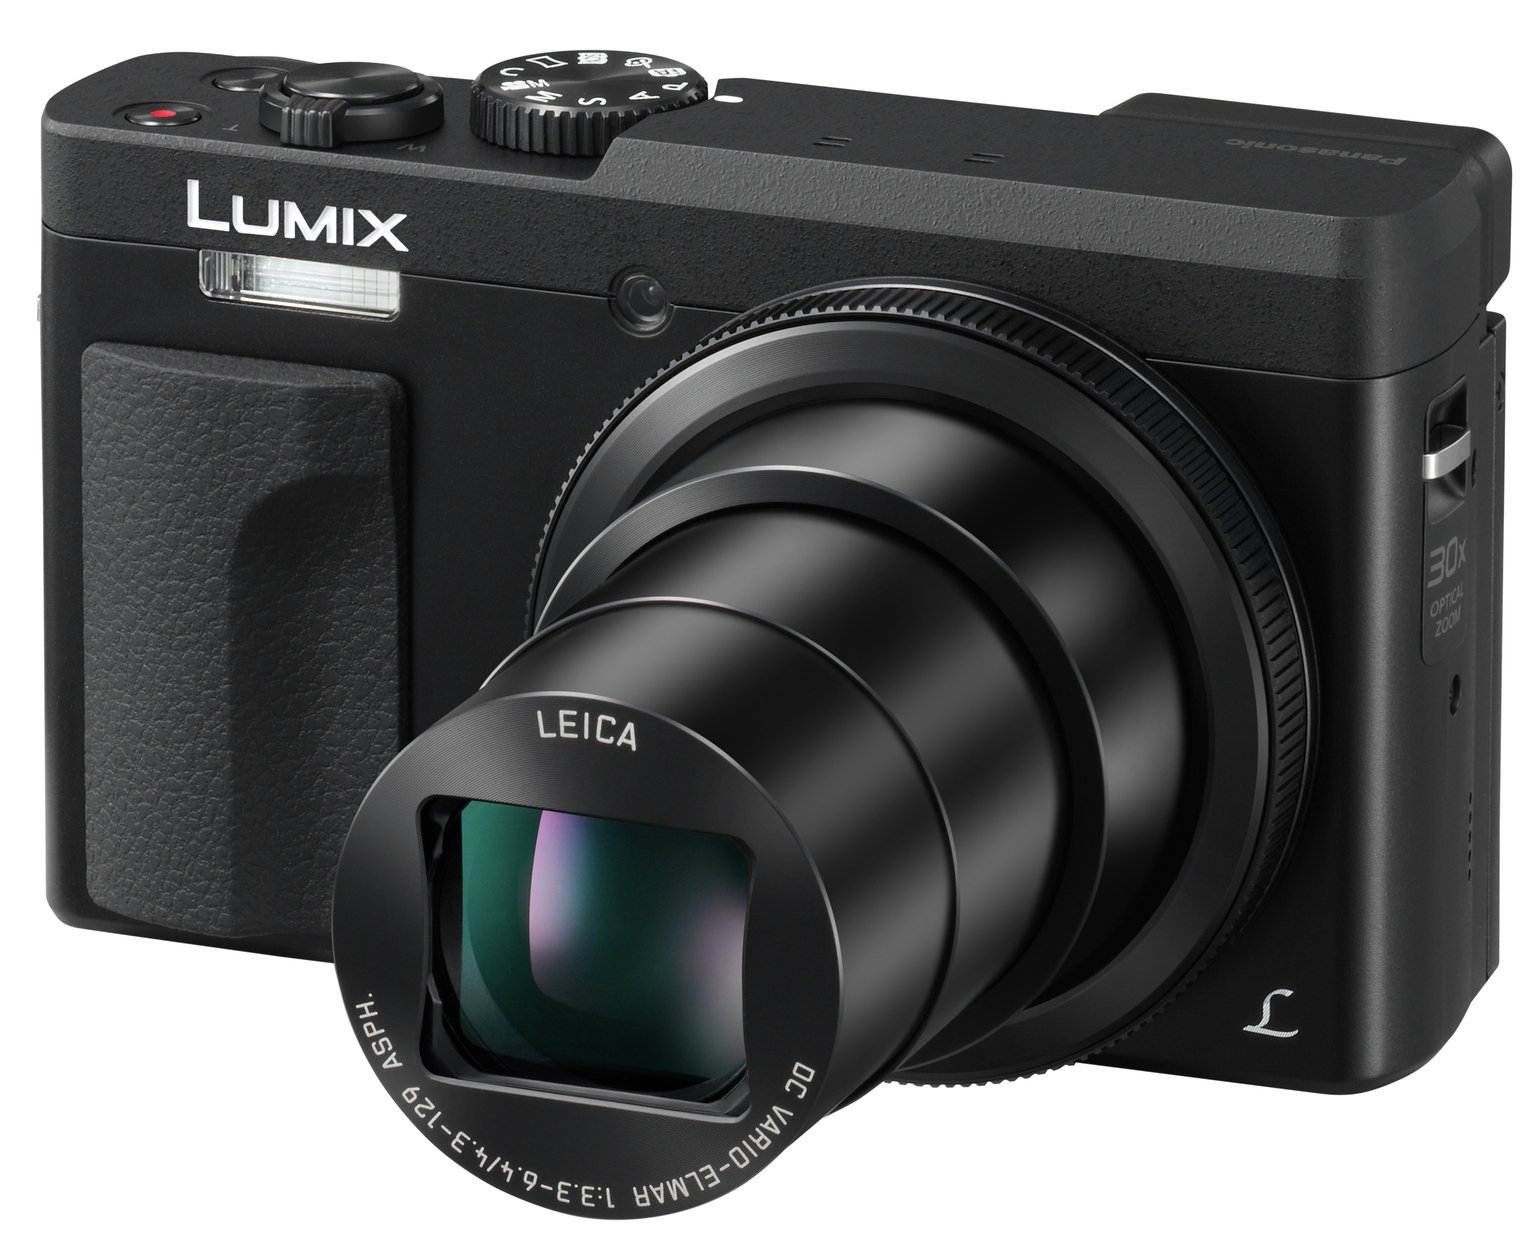 Panasonic Lumix TZ90 Compact Camera Review